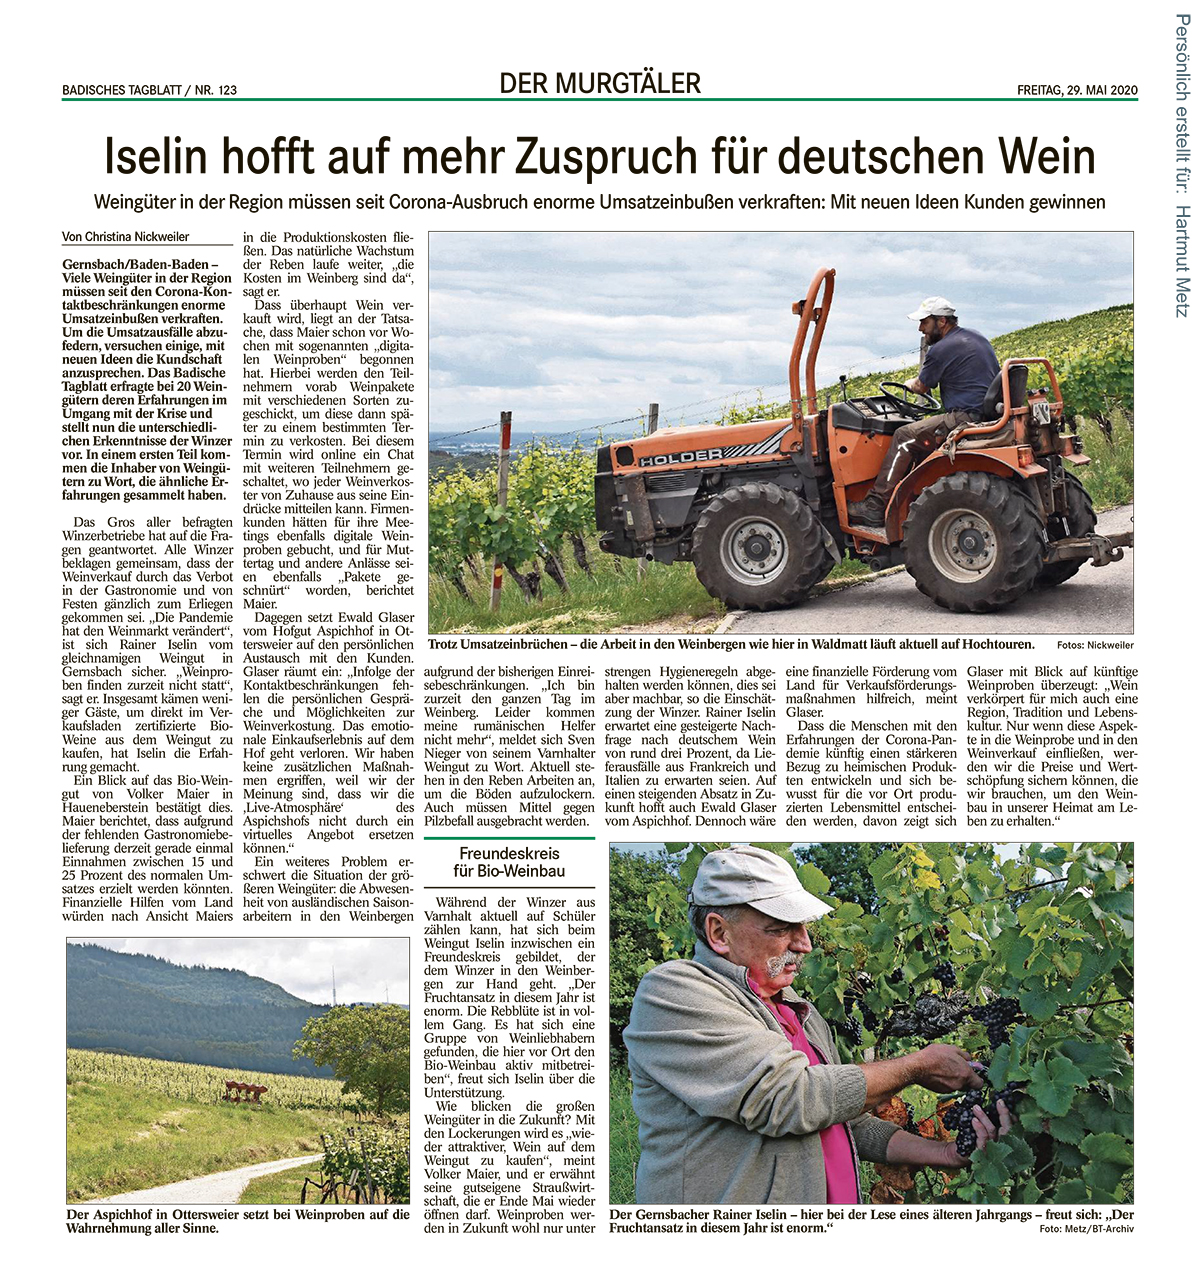 Badisches Tagblatt, Ausgabe: Murgtal, vom: Freitag, 29. Mai 2020